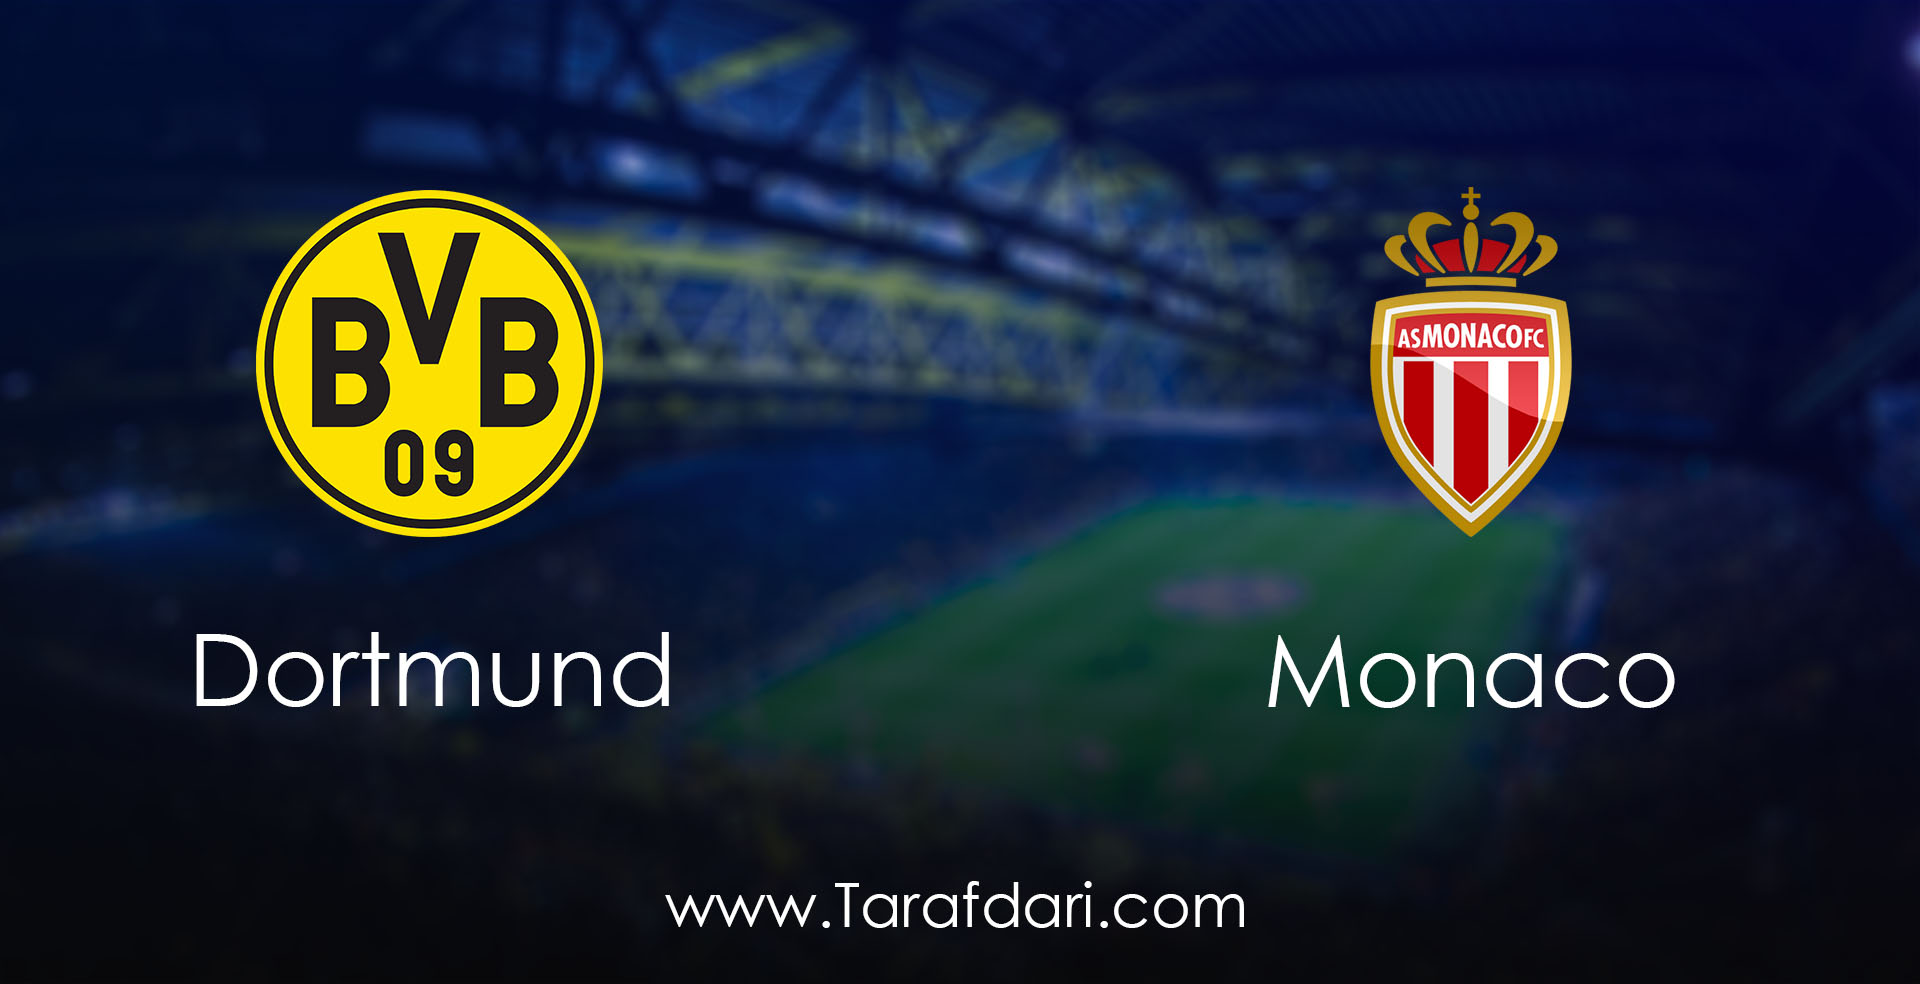 Dortmund vs Monaco-دور رفت -یک چهارم نهایی لیگ قهرمانان اروپا